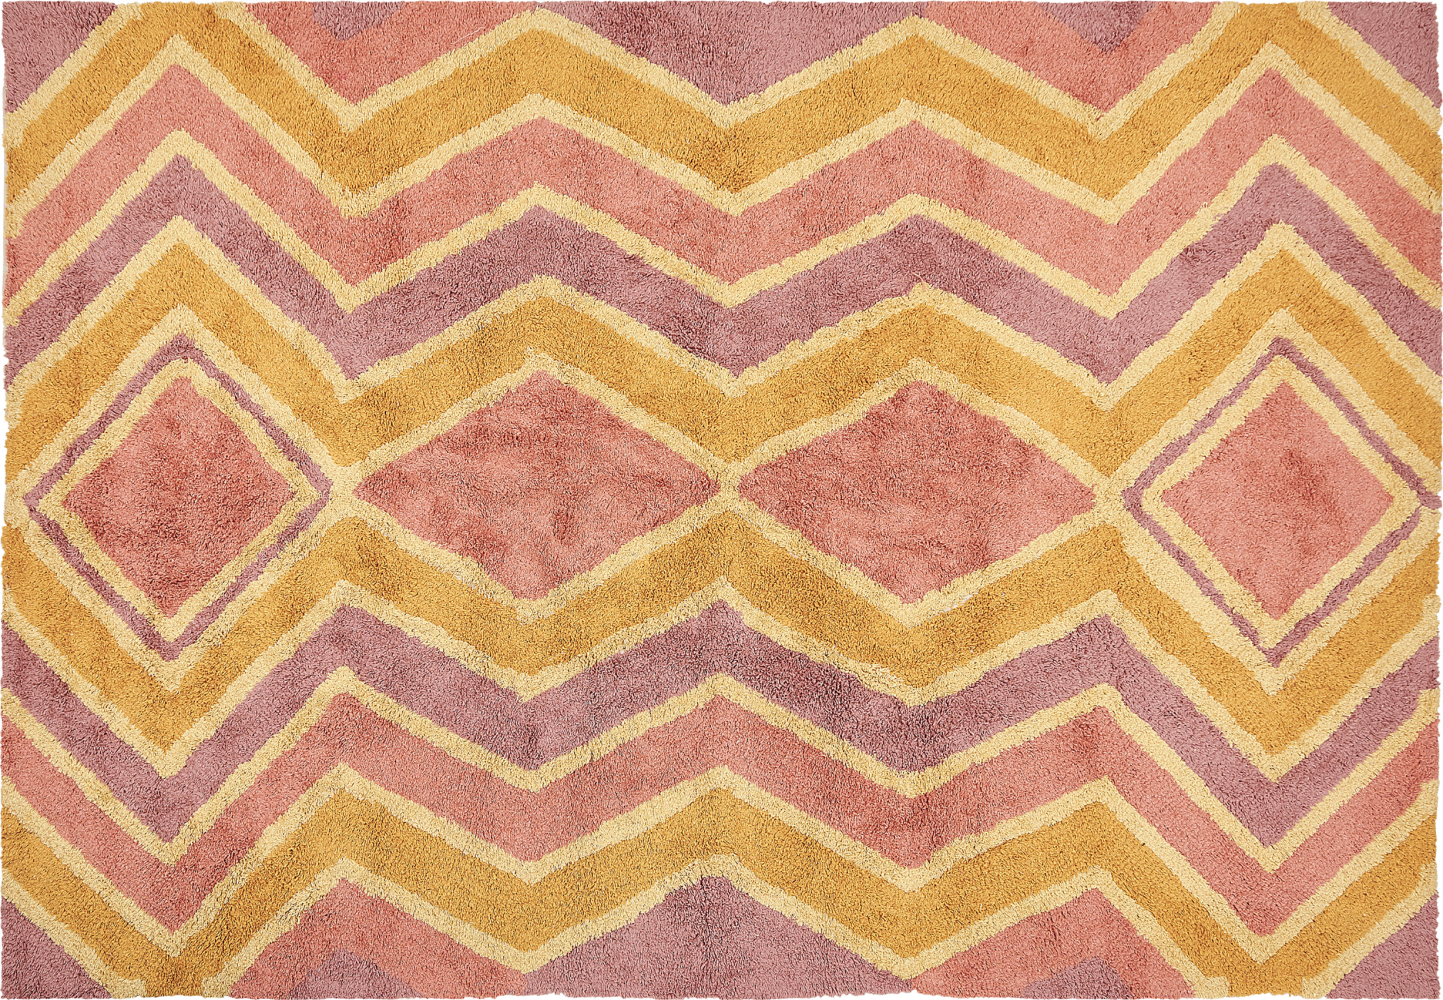 Teppich Baumwolle mehrfarbig 160 x 230 cm CANAKKALE Bild 1